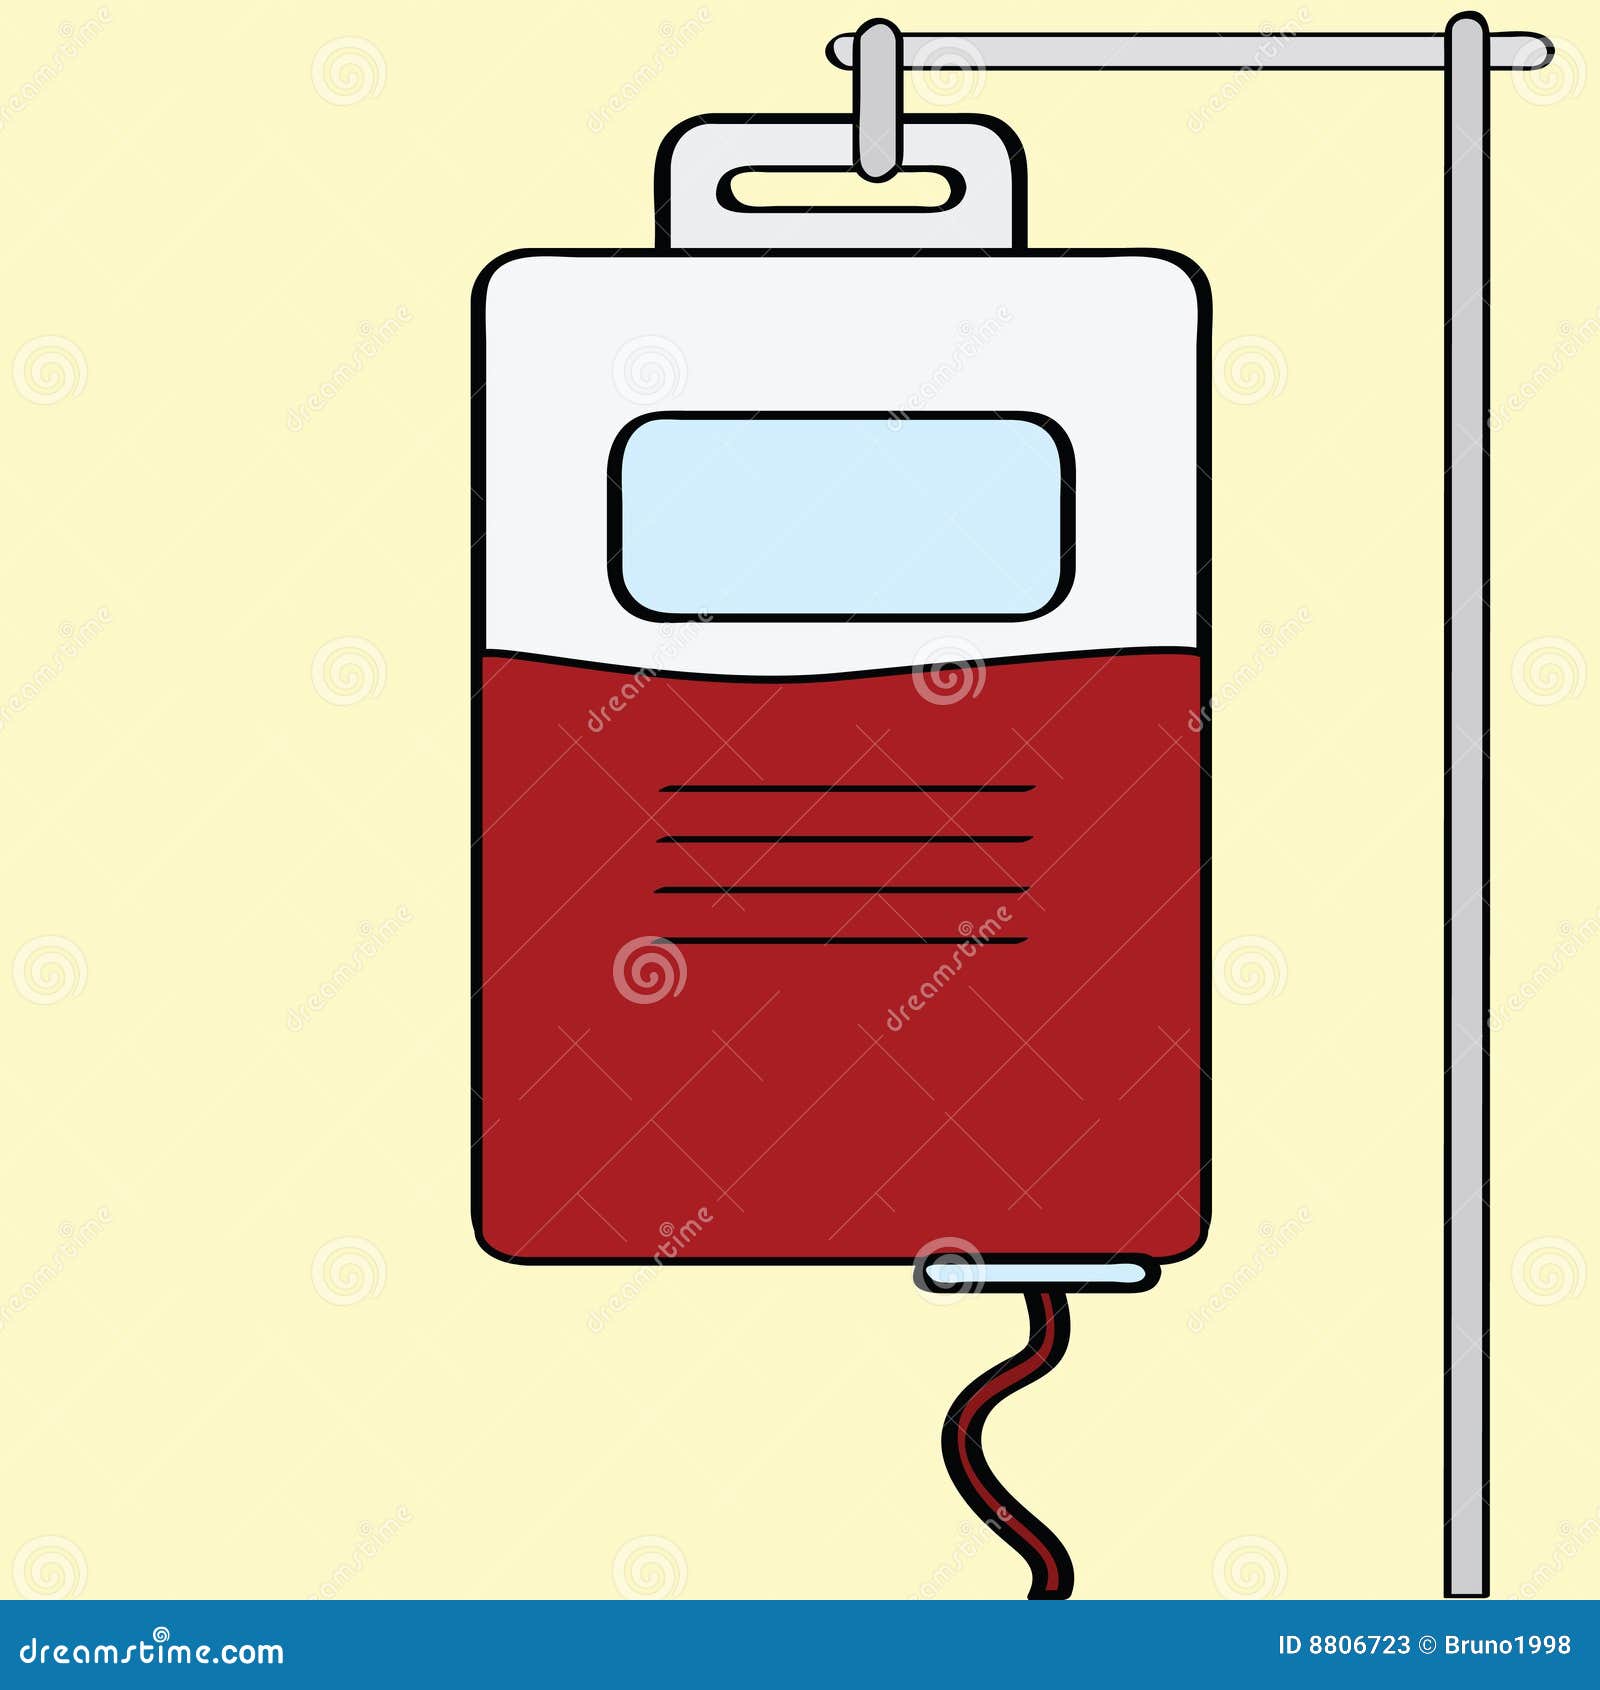 clipart blood transfusion - photo #25